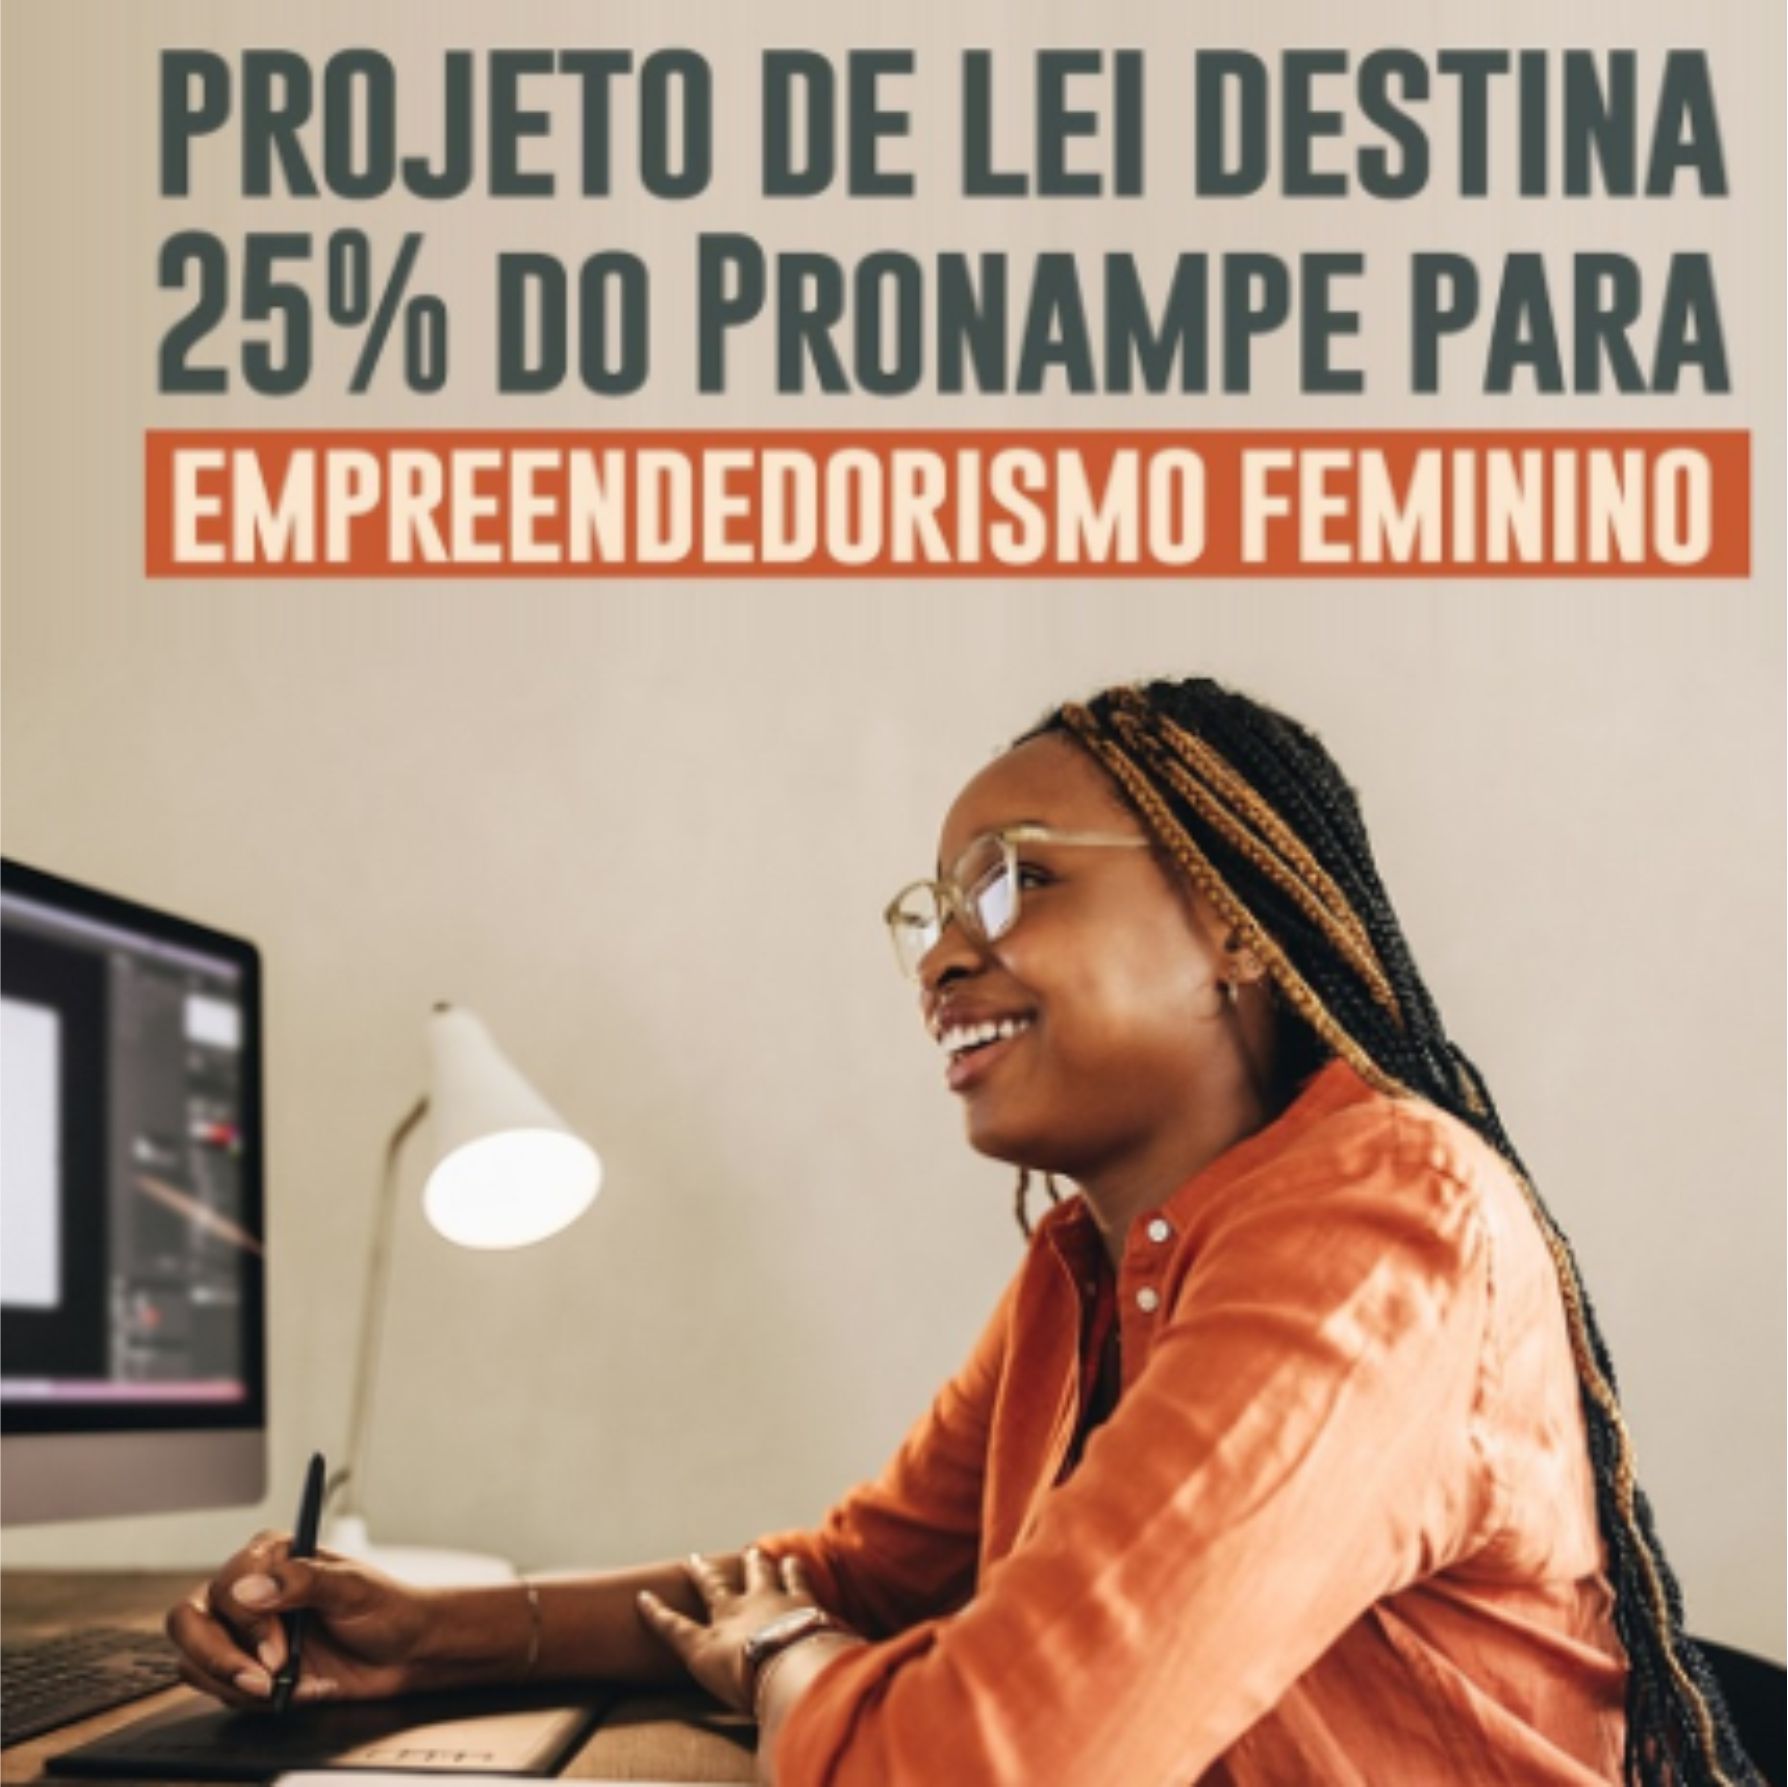 Empreendedorismo feminino